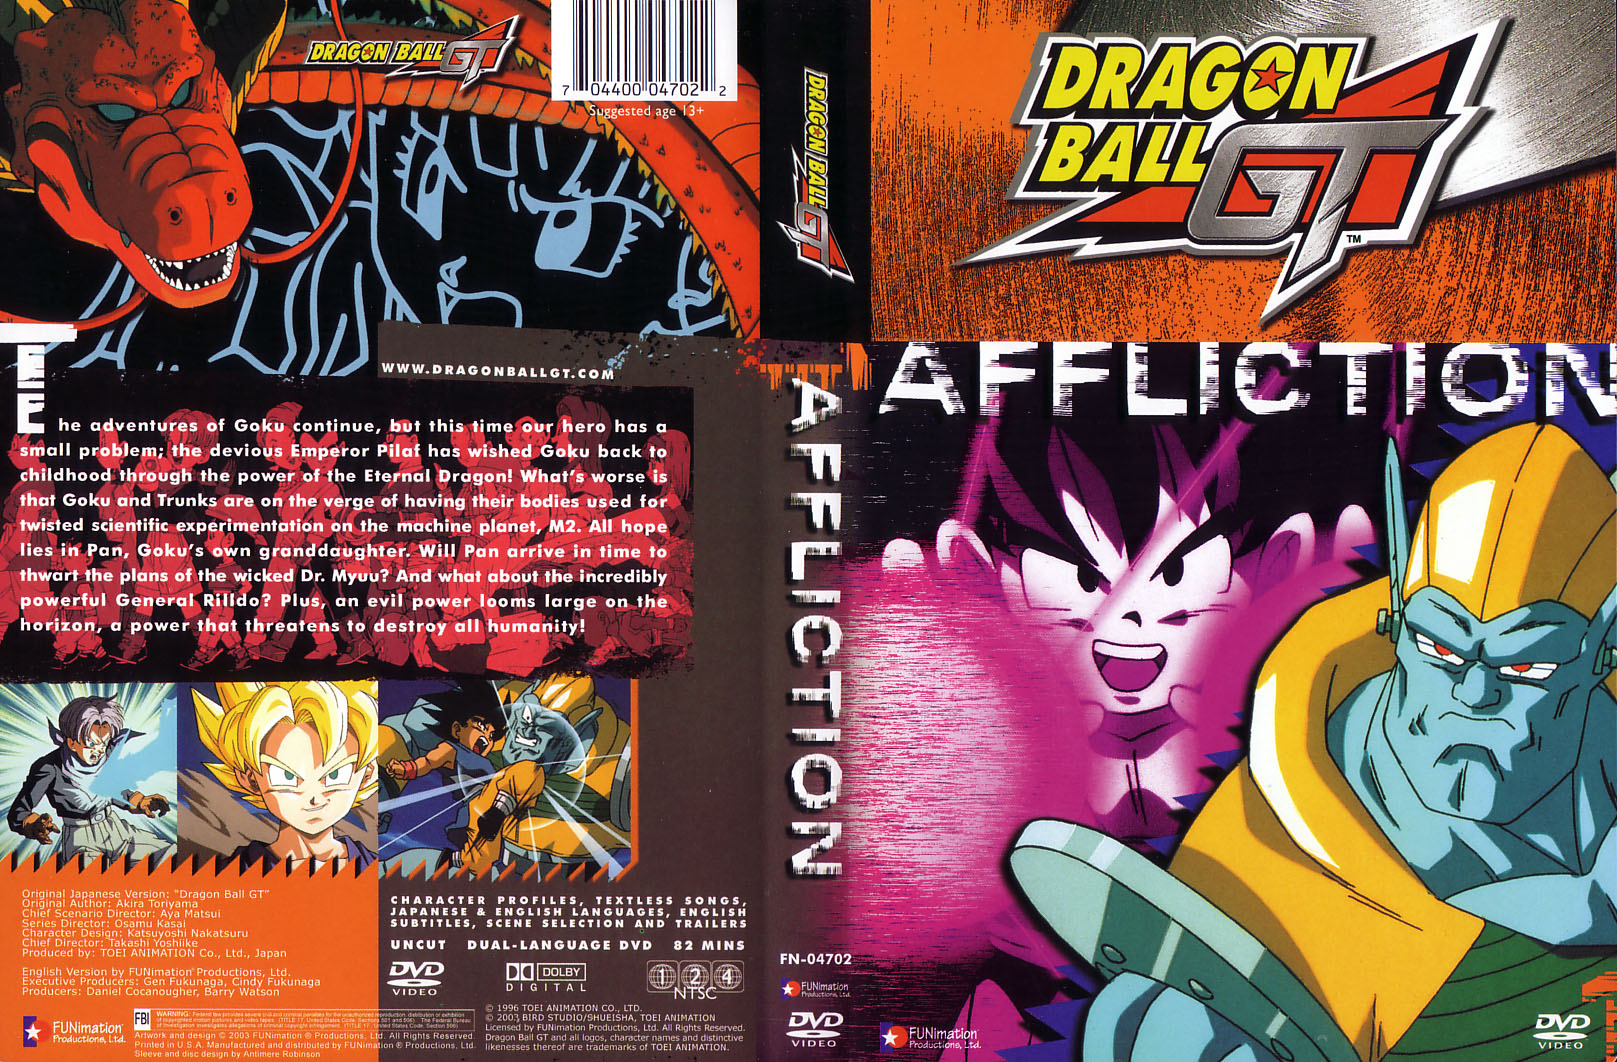 Jaquette DVD Dragonball GT 01 Affliction